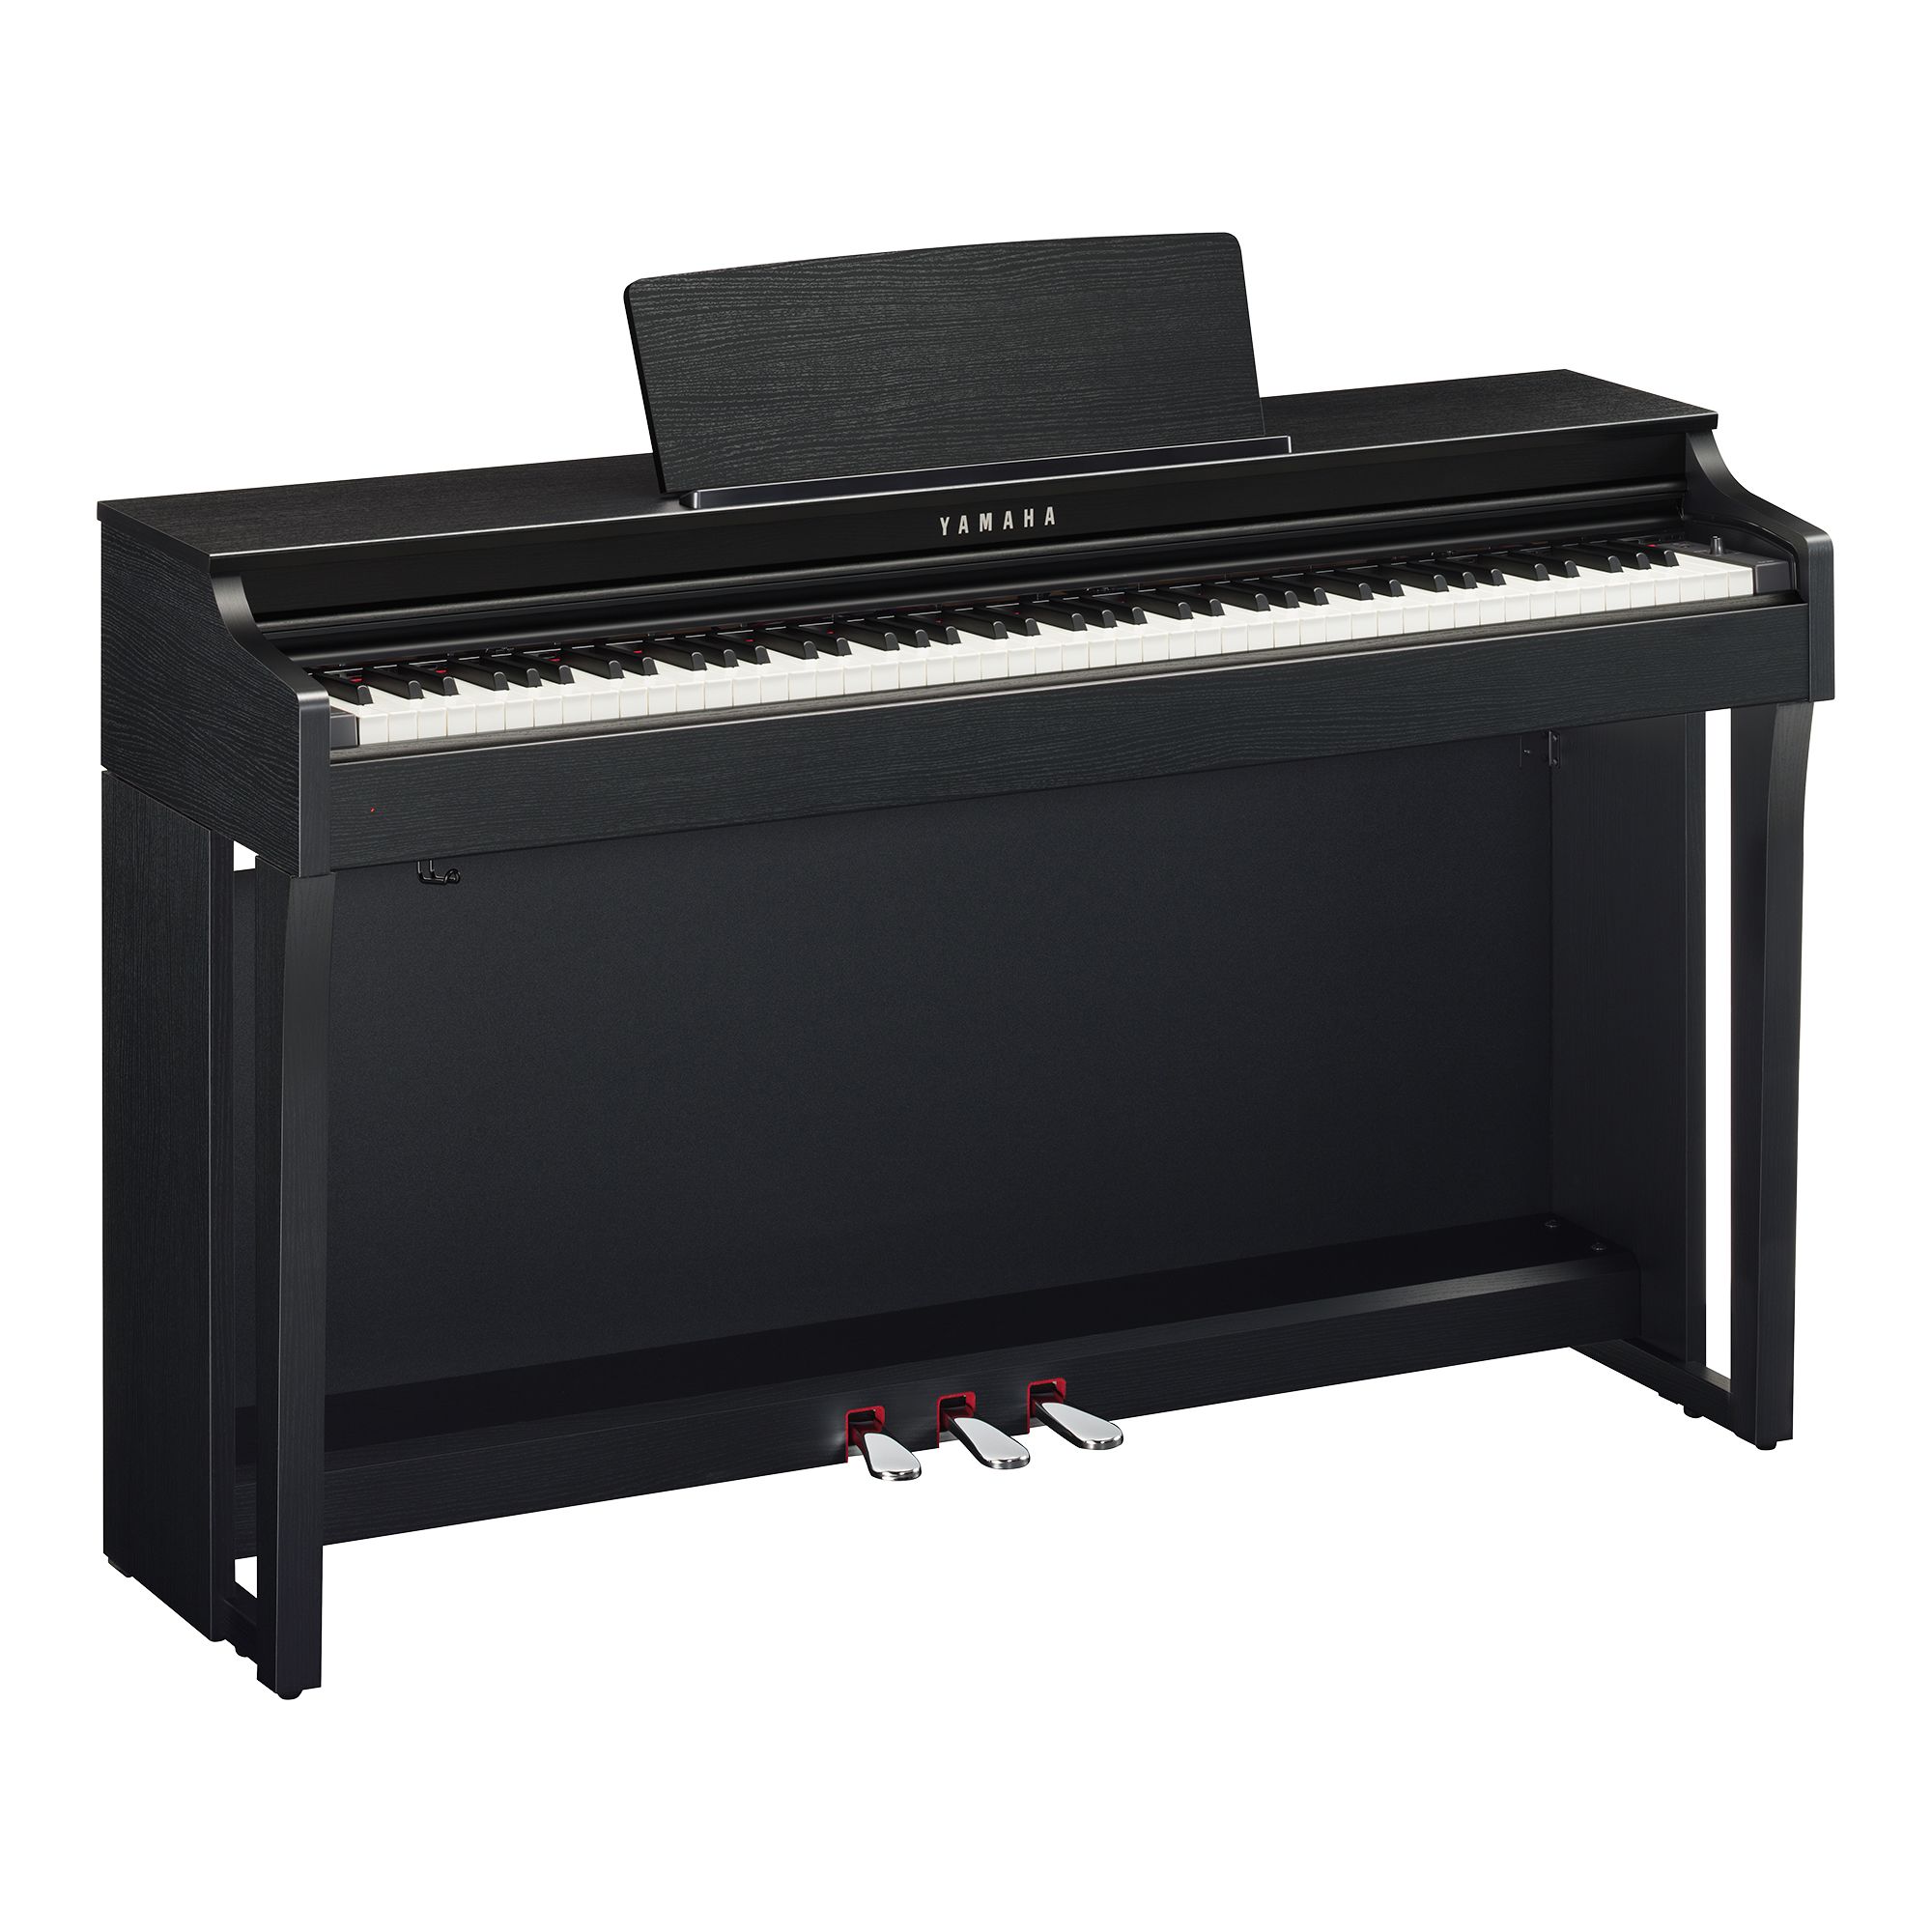 CLP-625 - Overview - Clavinova - Pianos - Musical Instruments ...